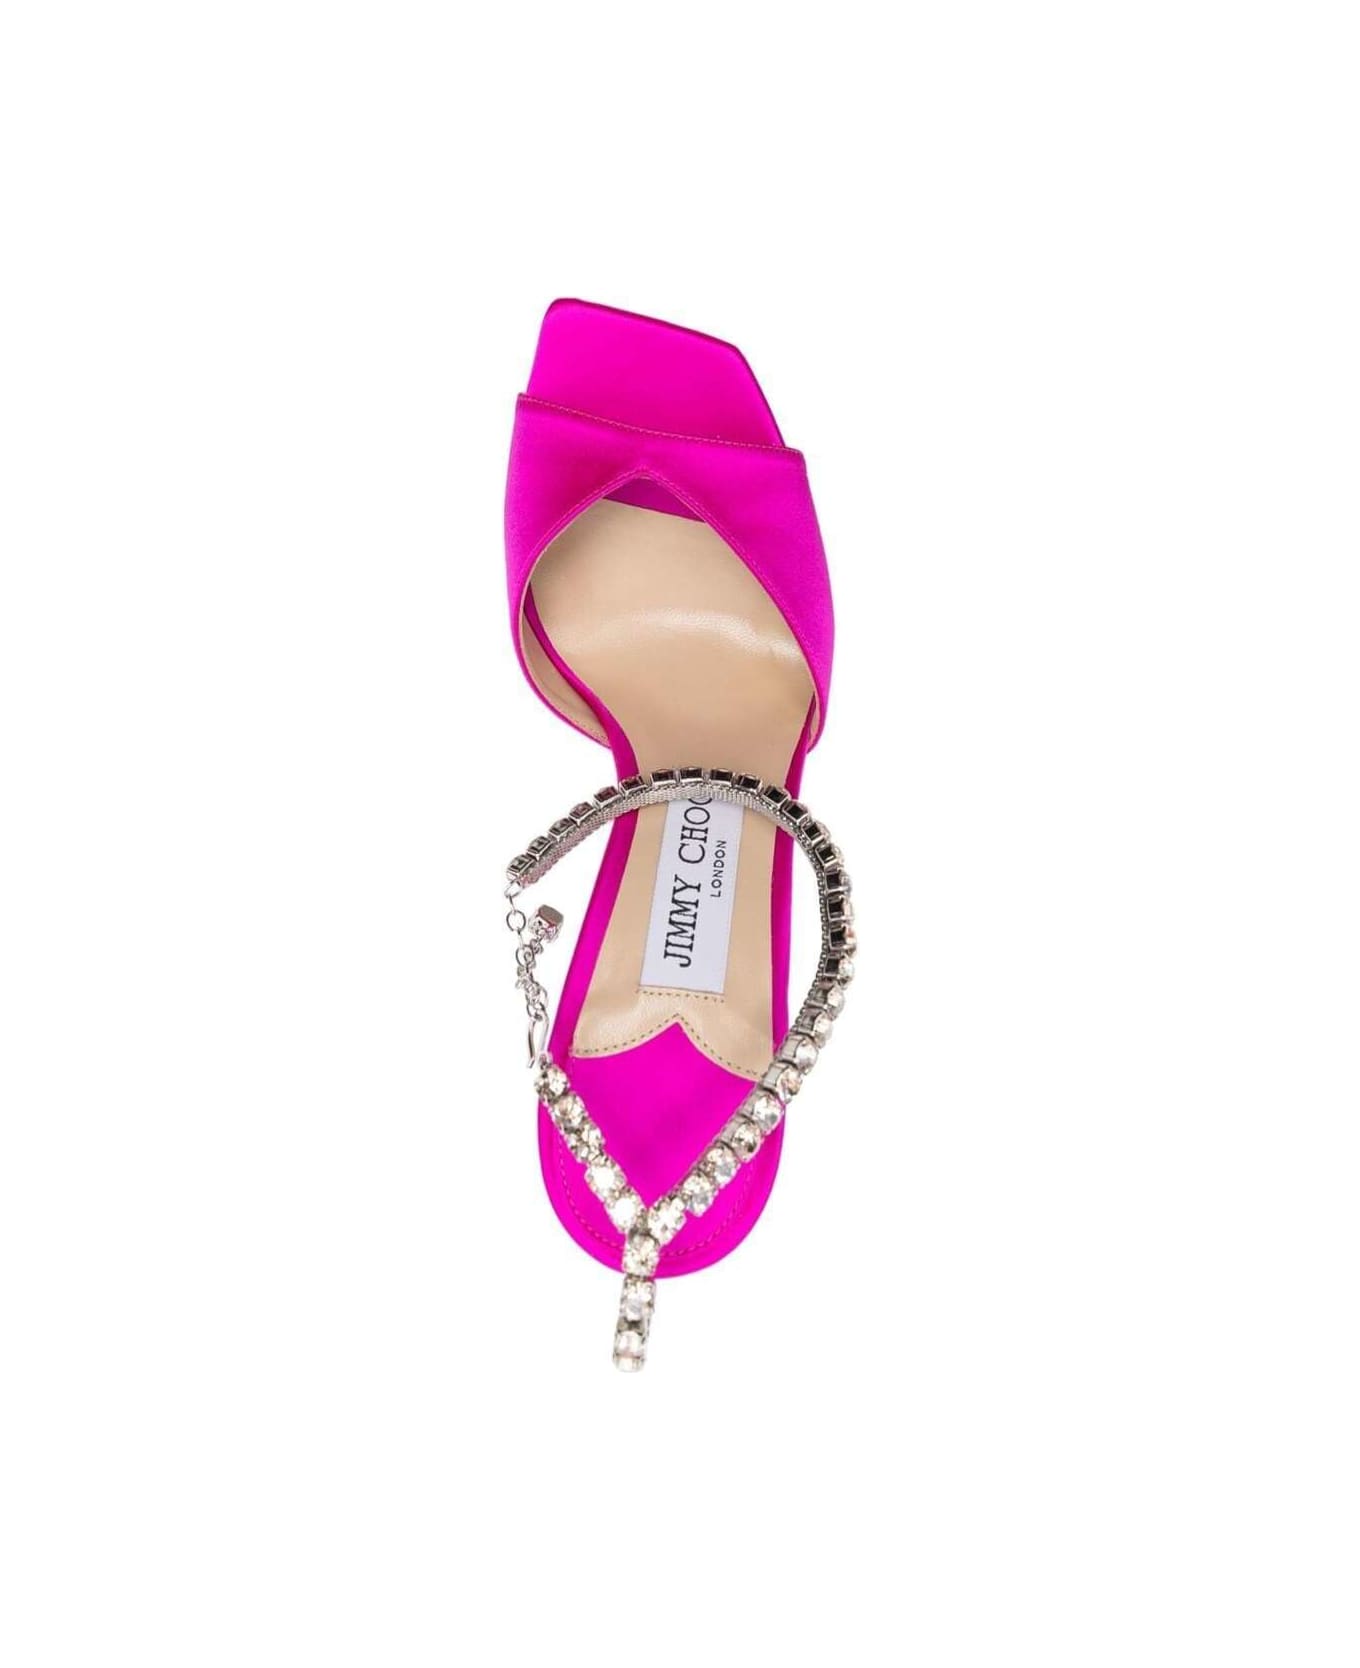 Jimmy Choo Fuchsia Pink Saeda Sandals With Crystal Embellishment In Satin Woman - Fuxia サンダル